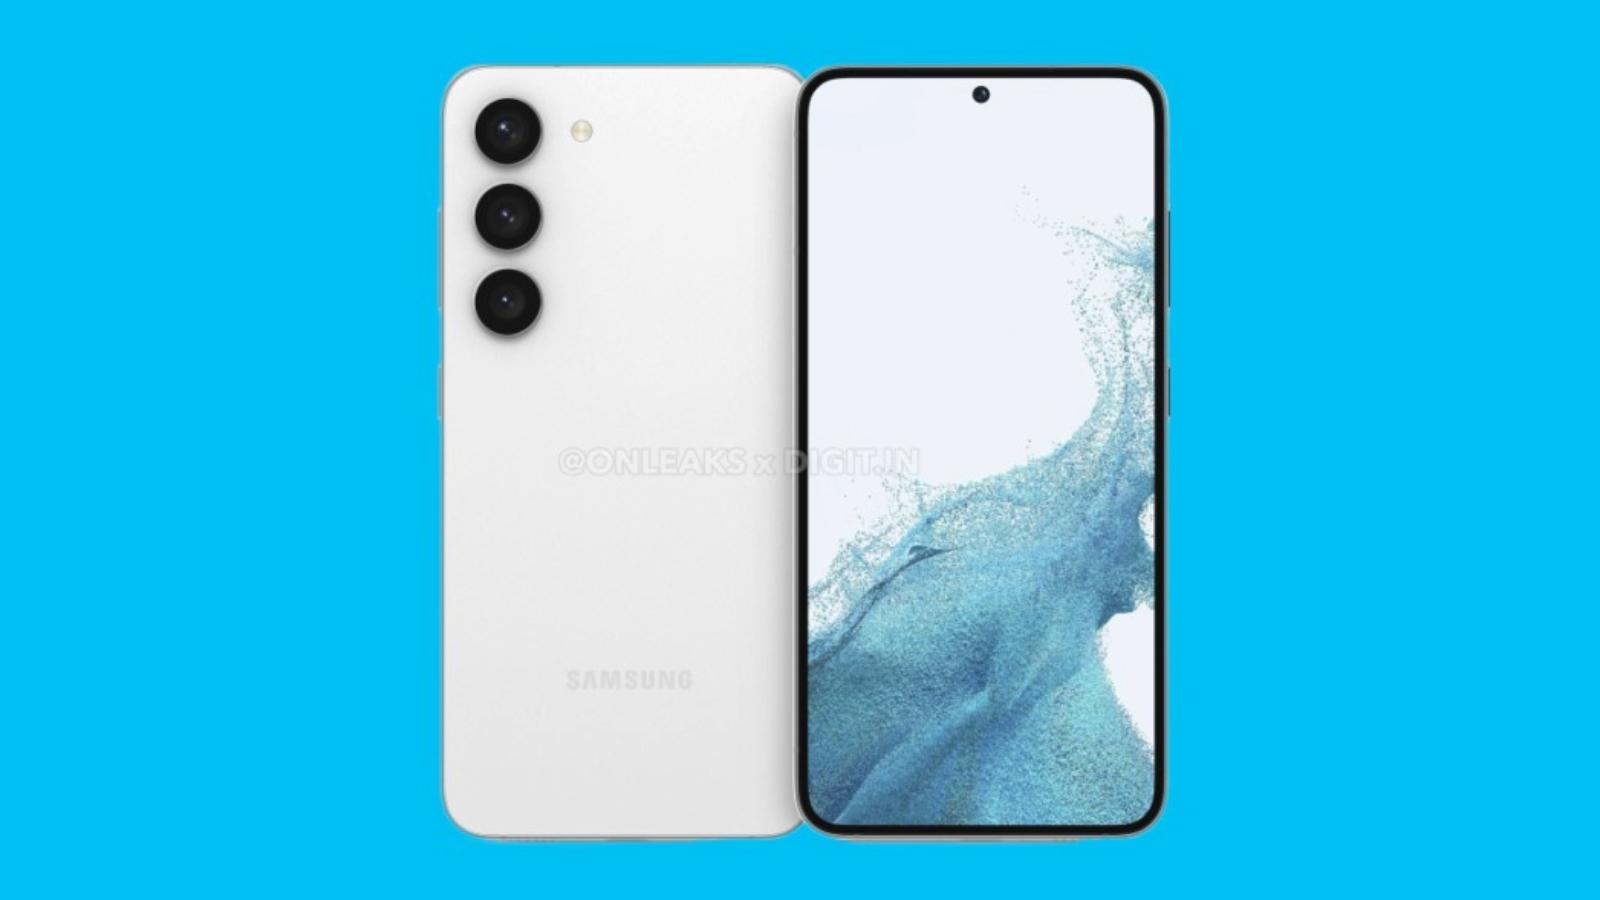 Samsung Galaxy S23 against a blue backrgound